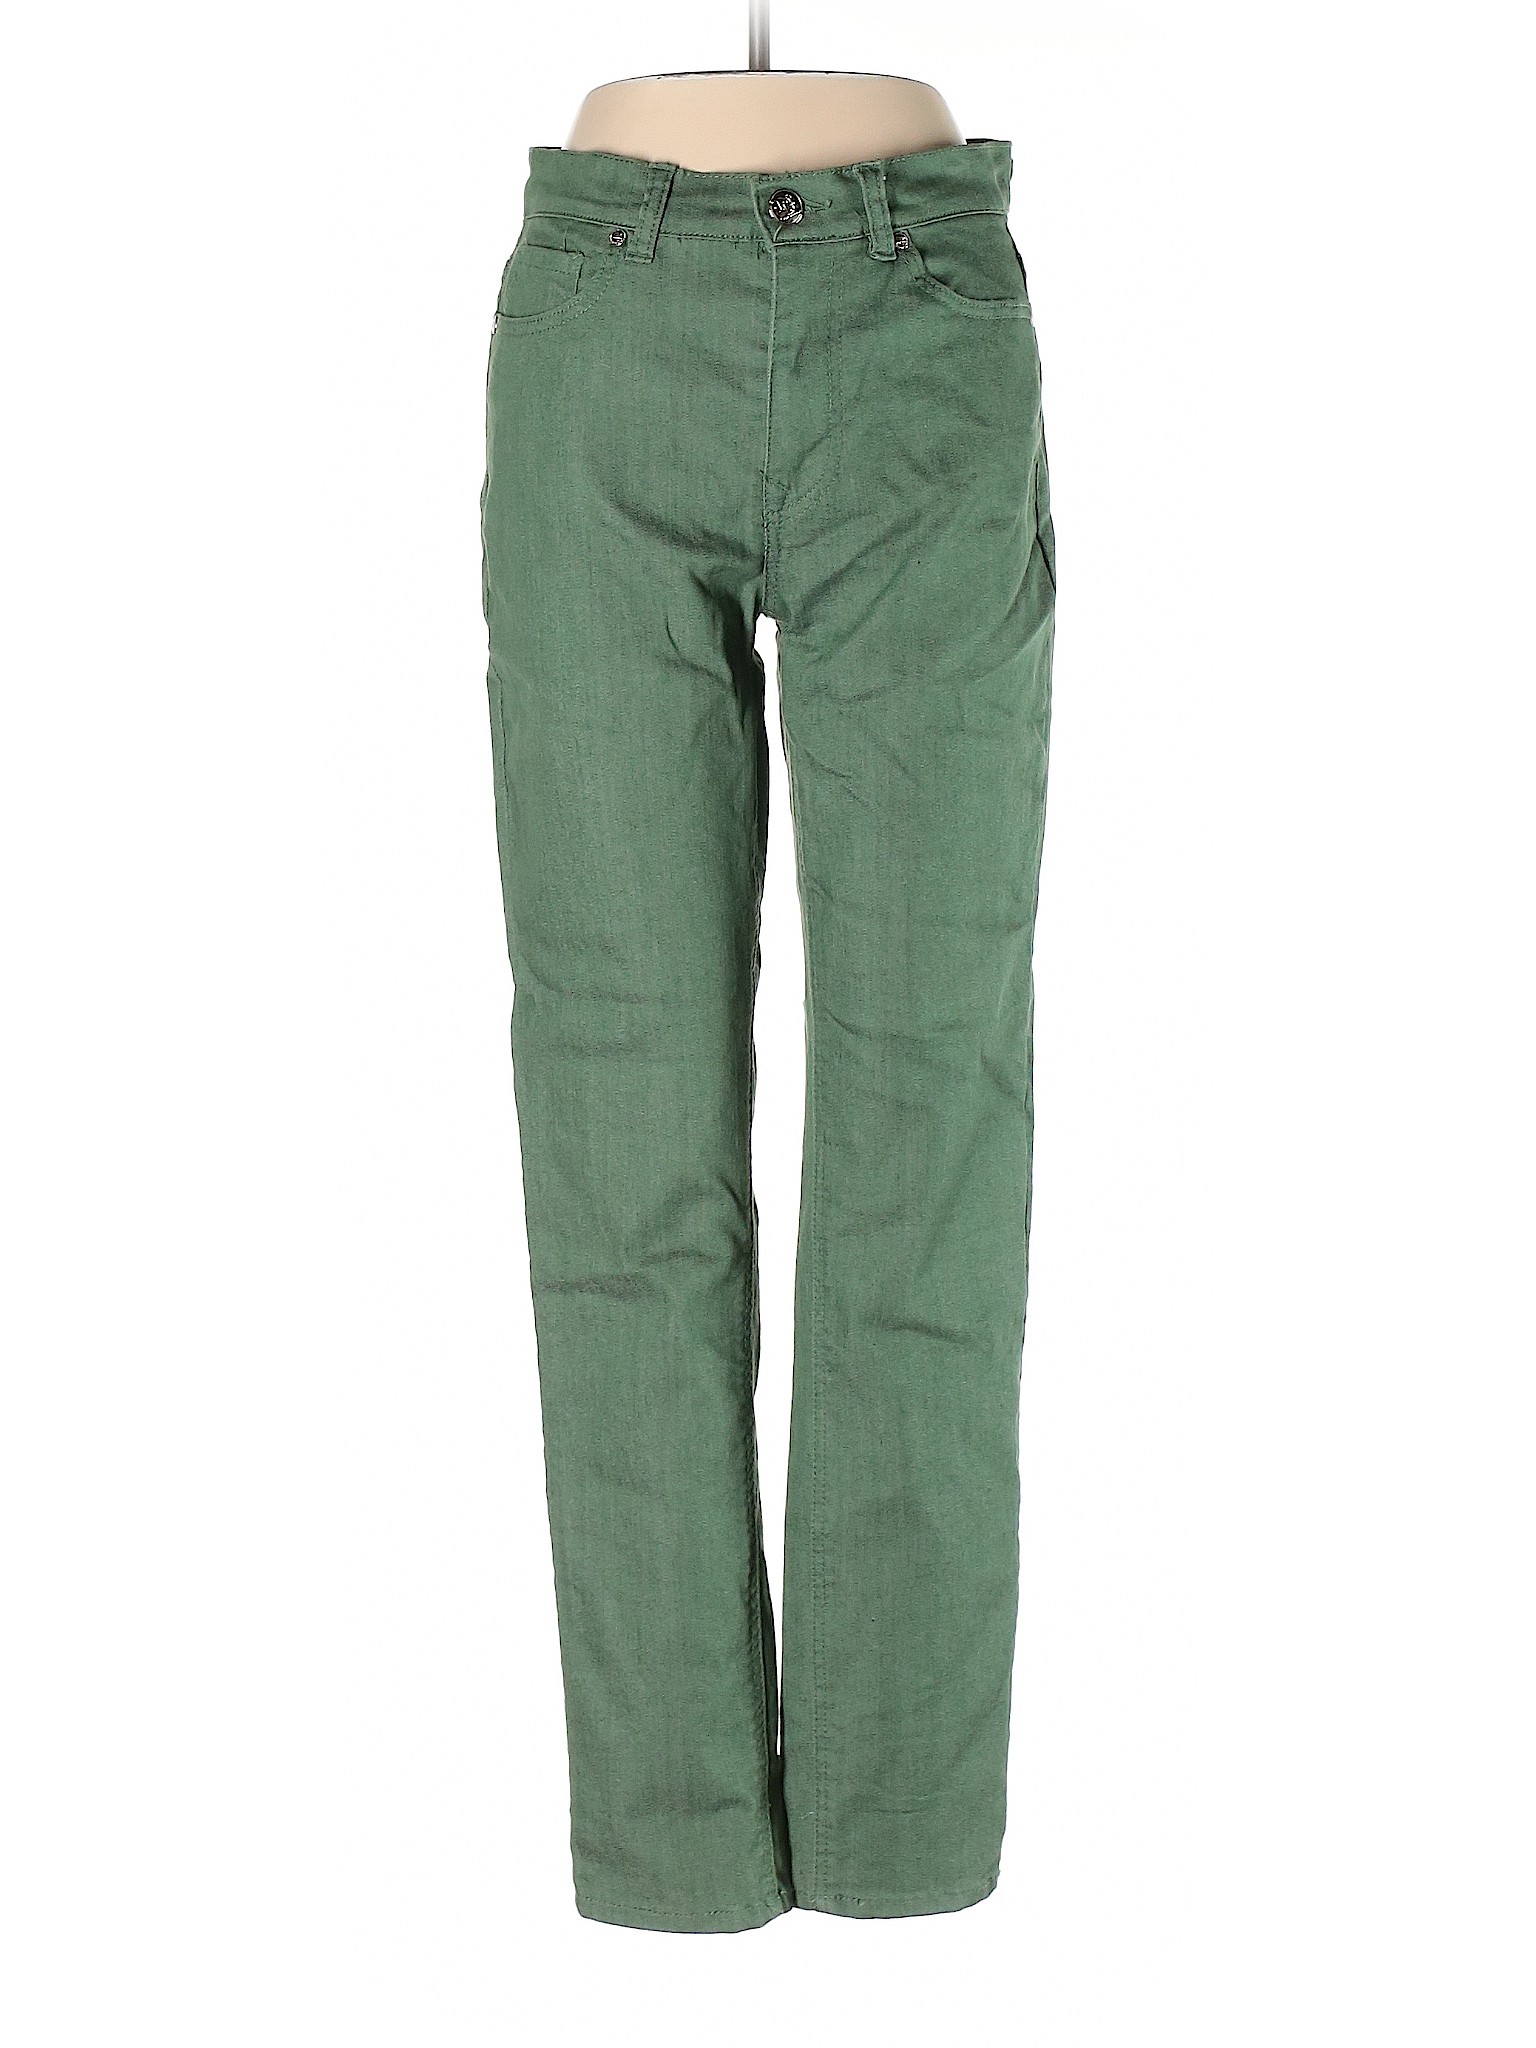 DG^2 by Diane Gilman Women Green Jeans 6 | eBay